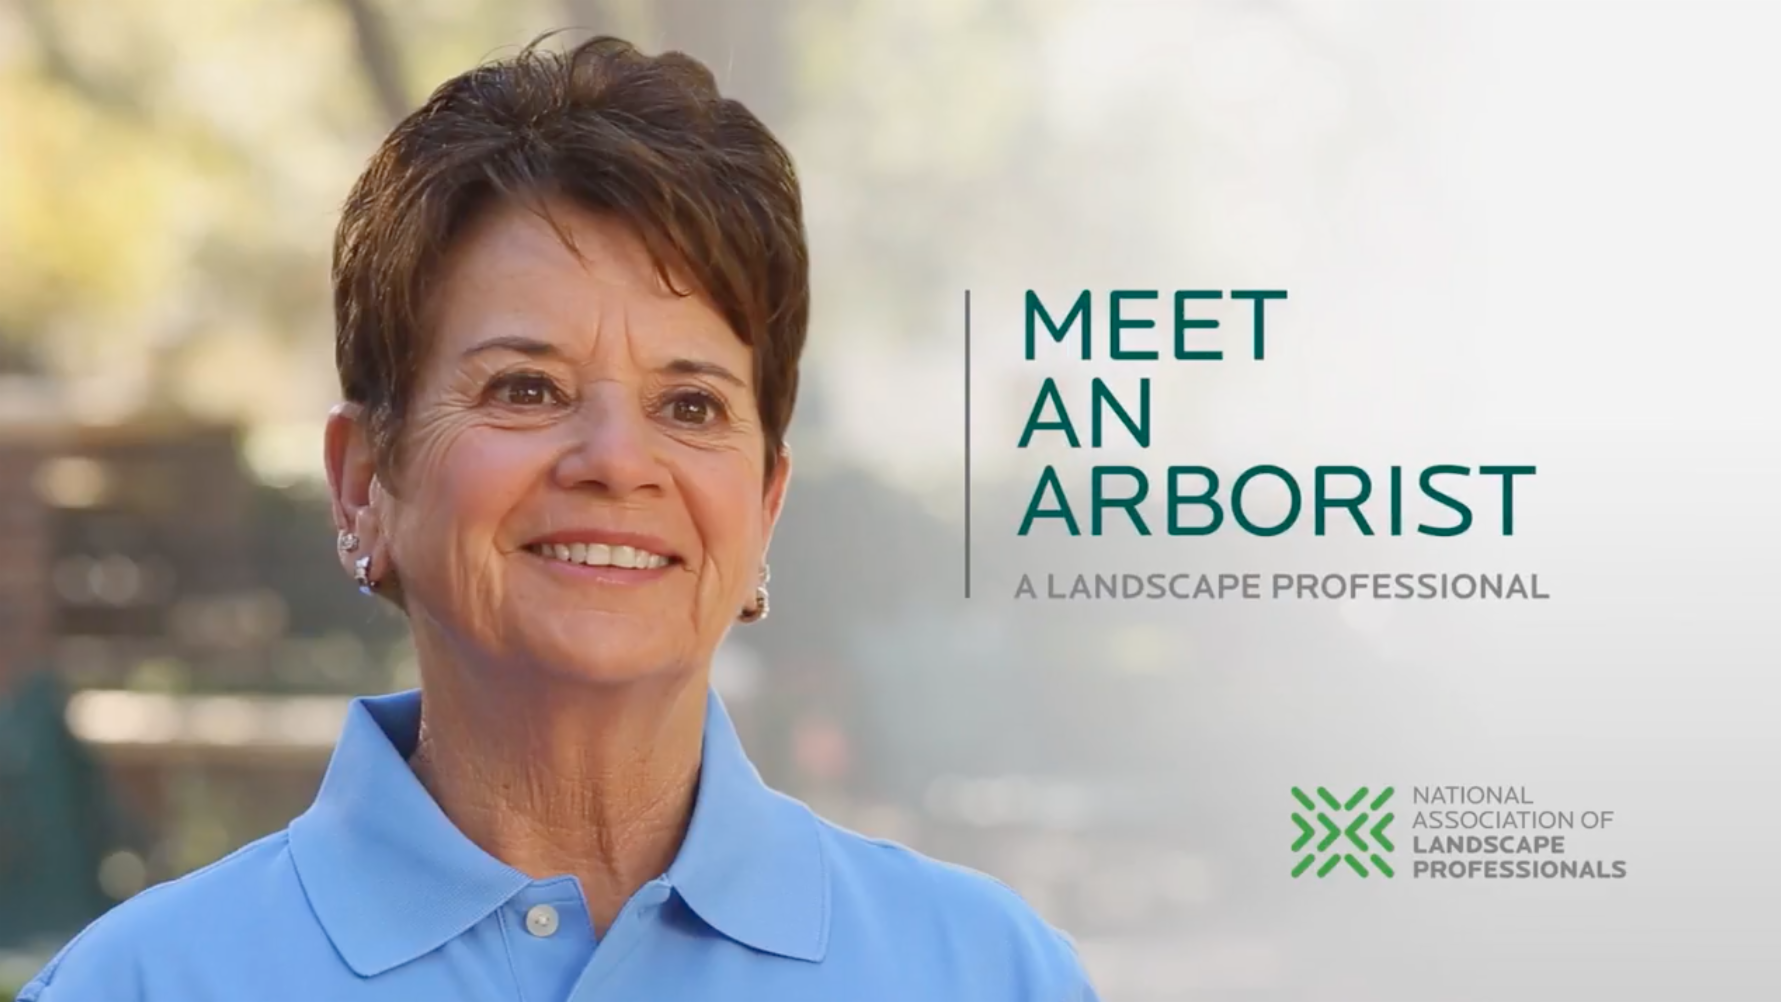 Meet an Arborist - Landscape Industry Testimonial Videos